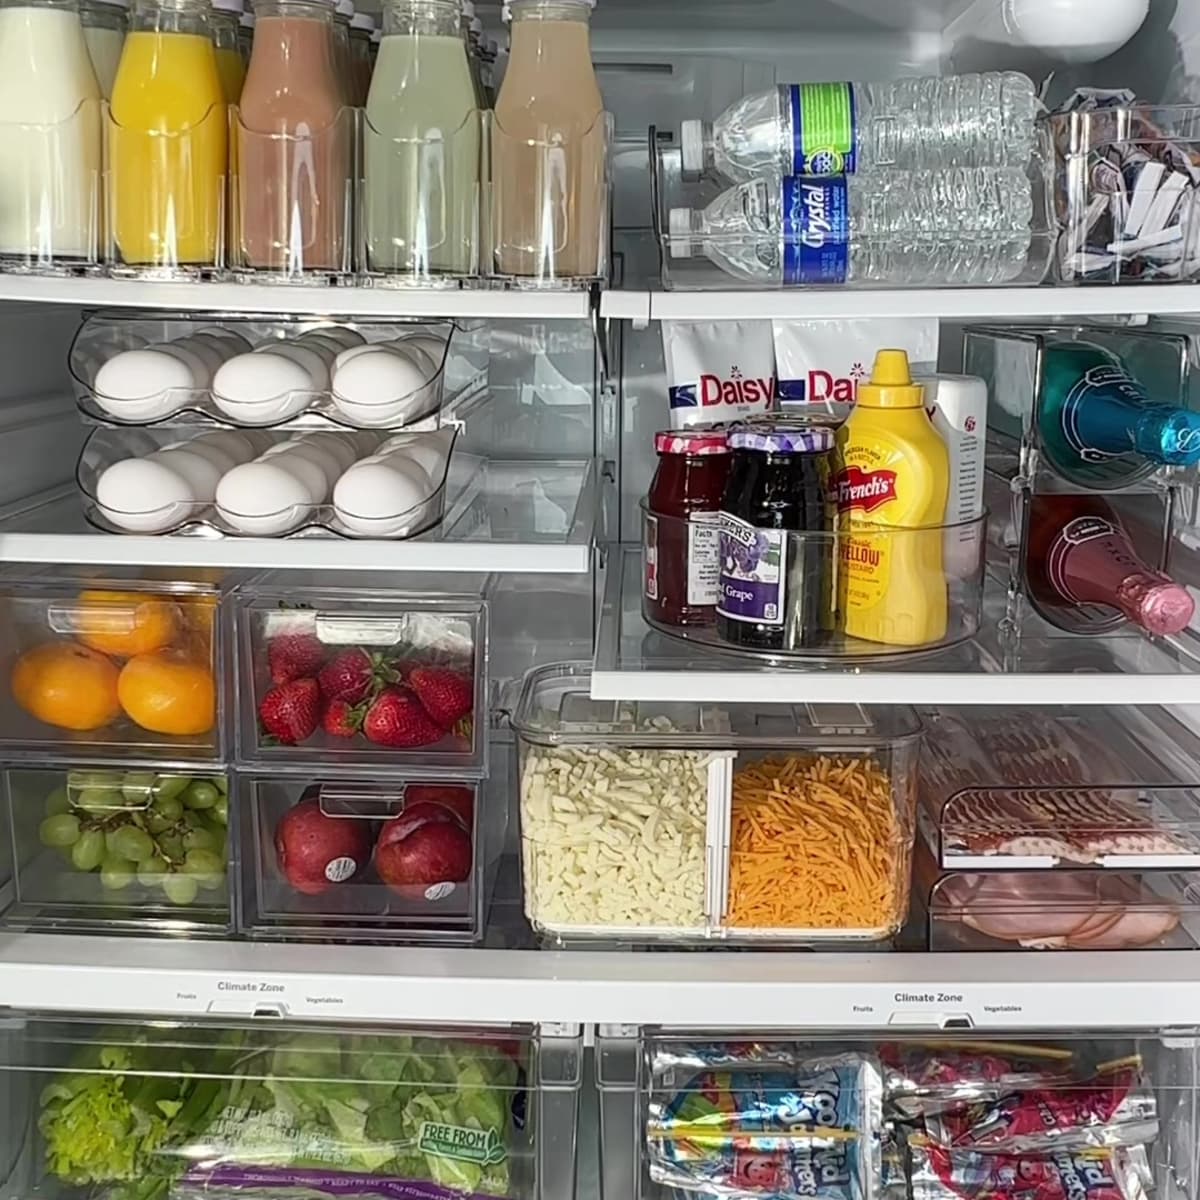 POV: Organizing the mini fridge that TikTok made you buy ✨💅 For produ